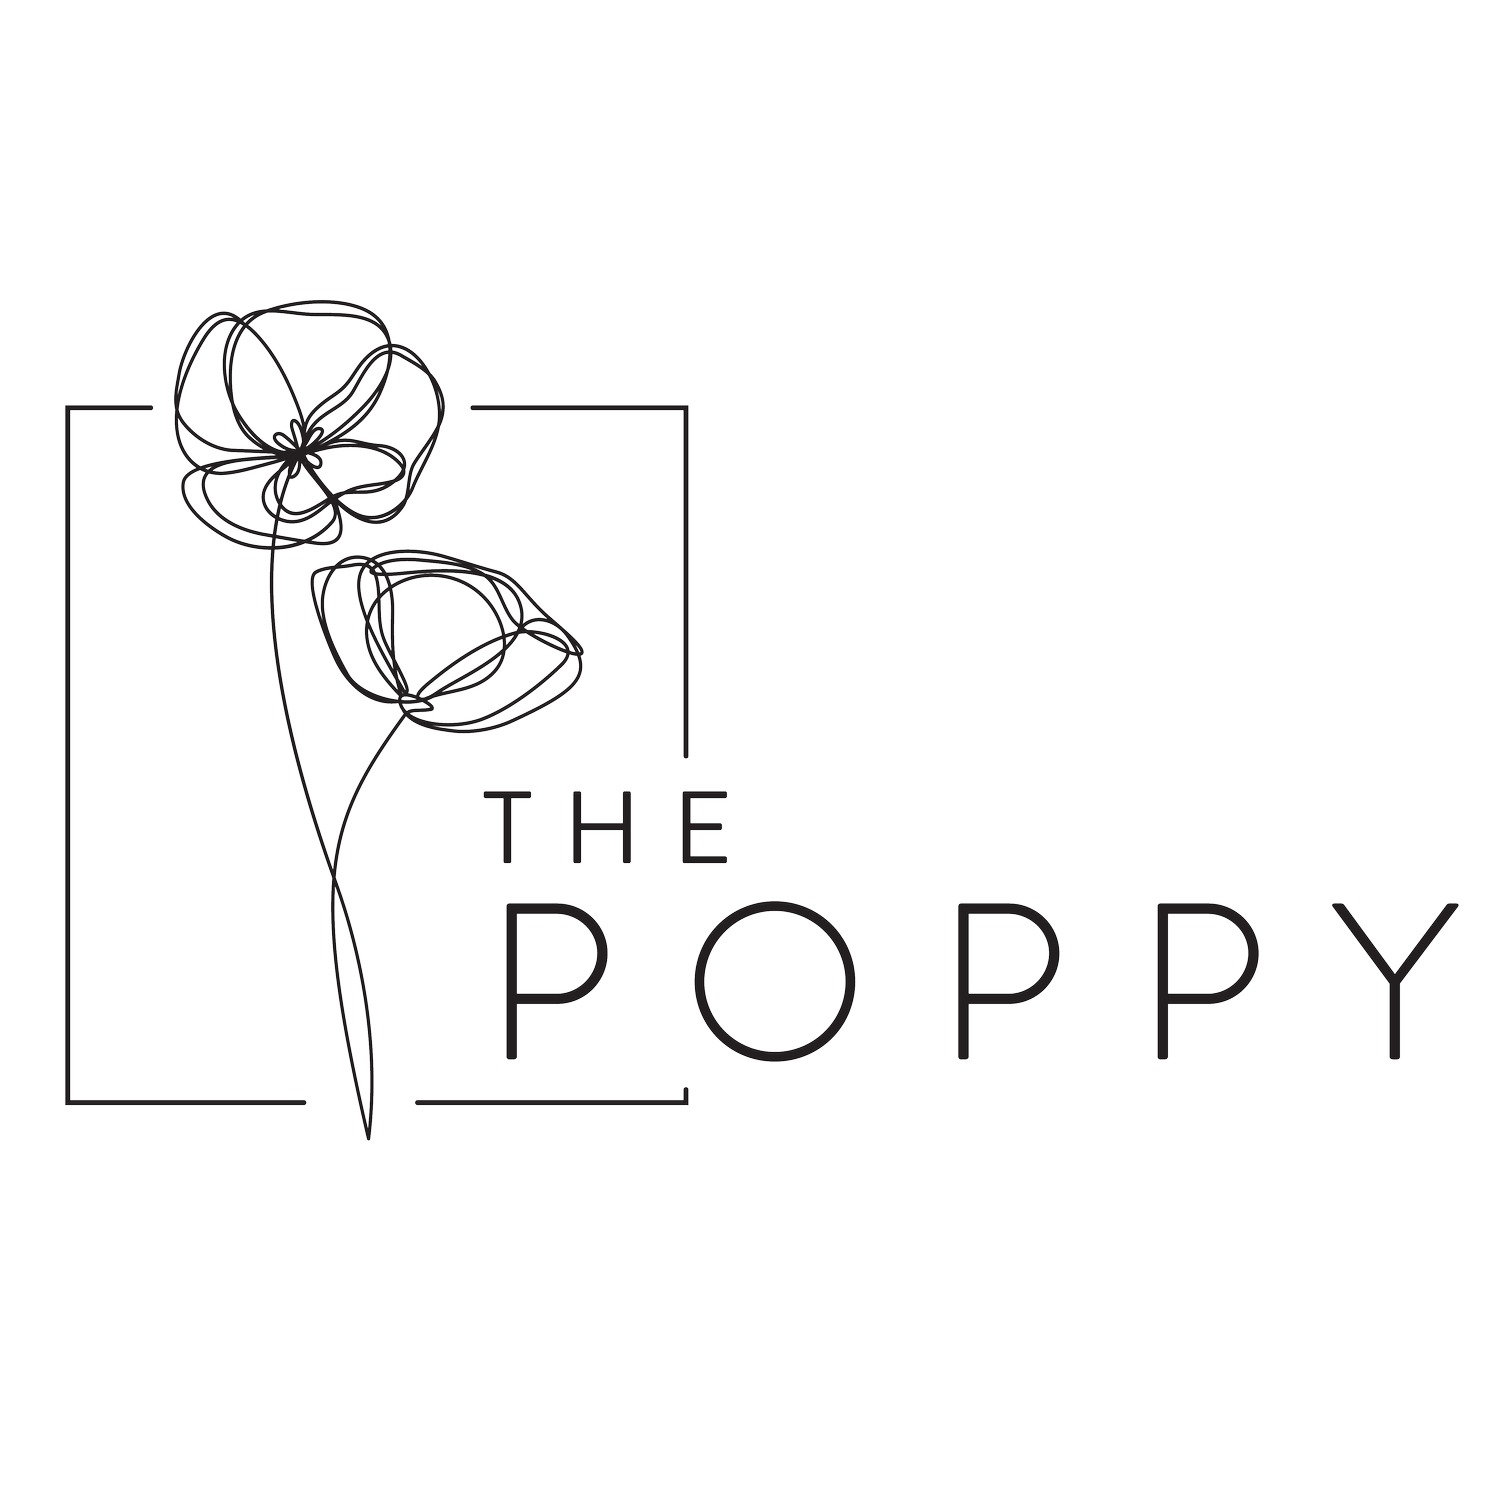 The Pop Up Poppy